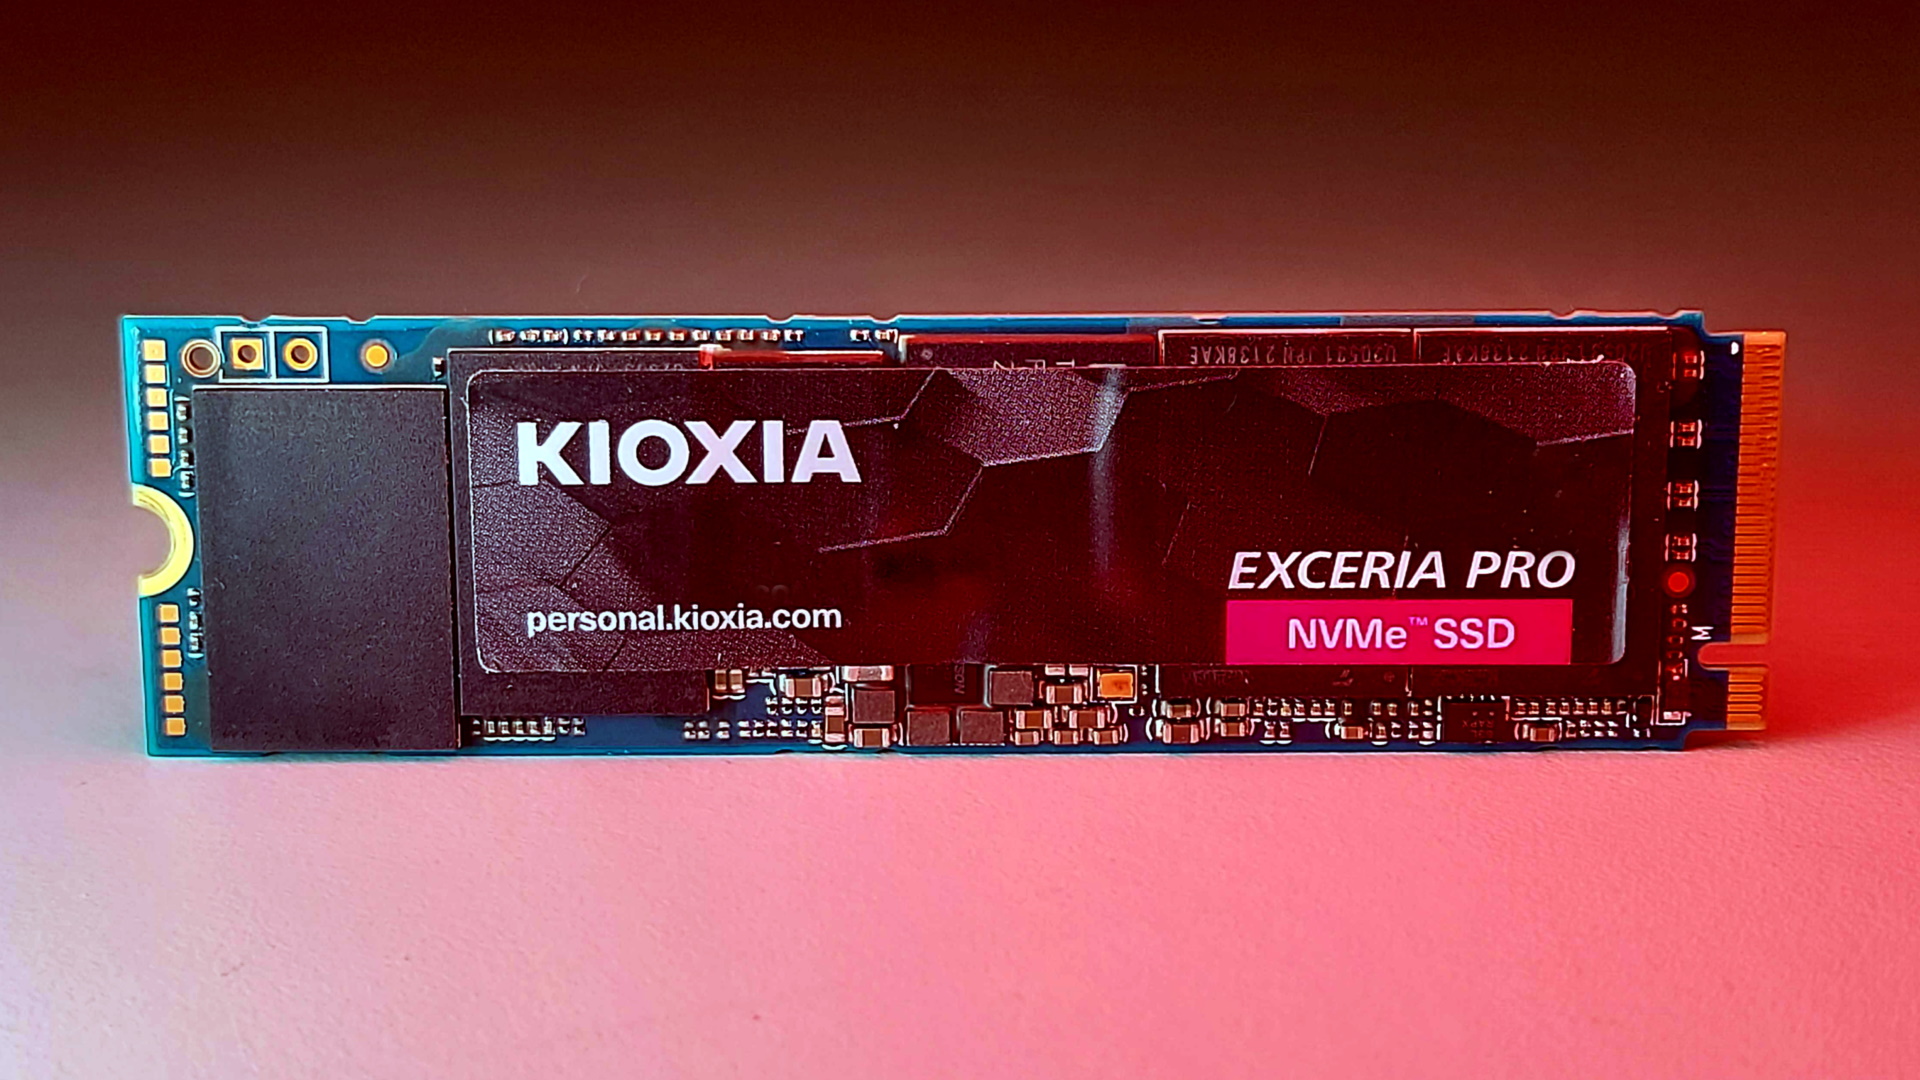  Kioxia Exceria Pro 2TB SSD review 